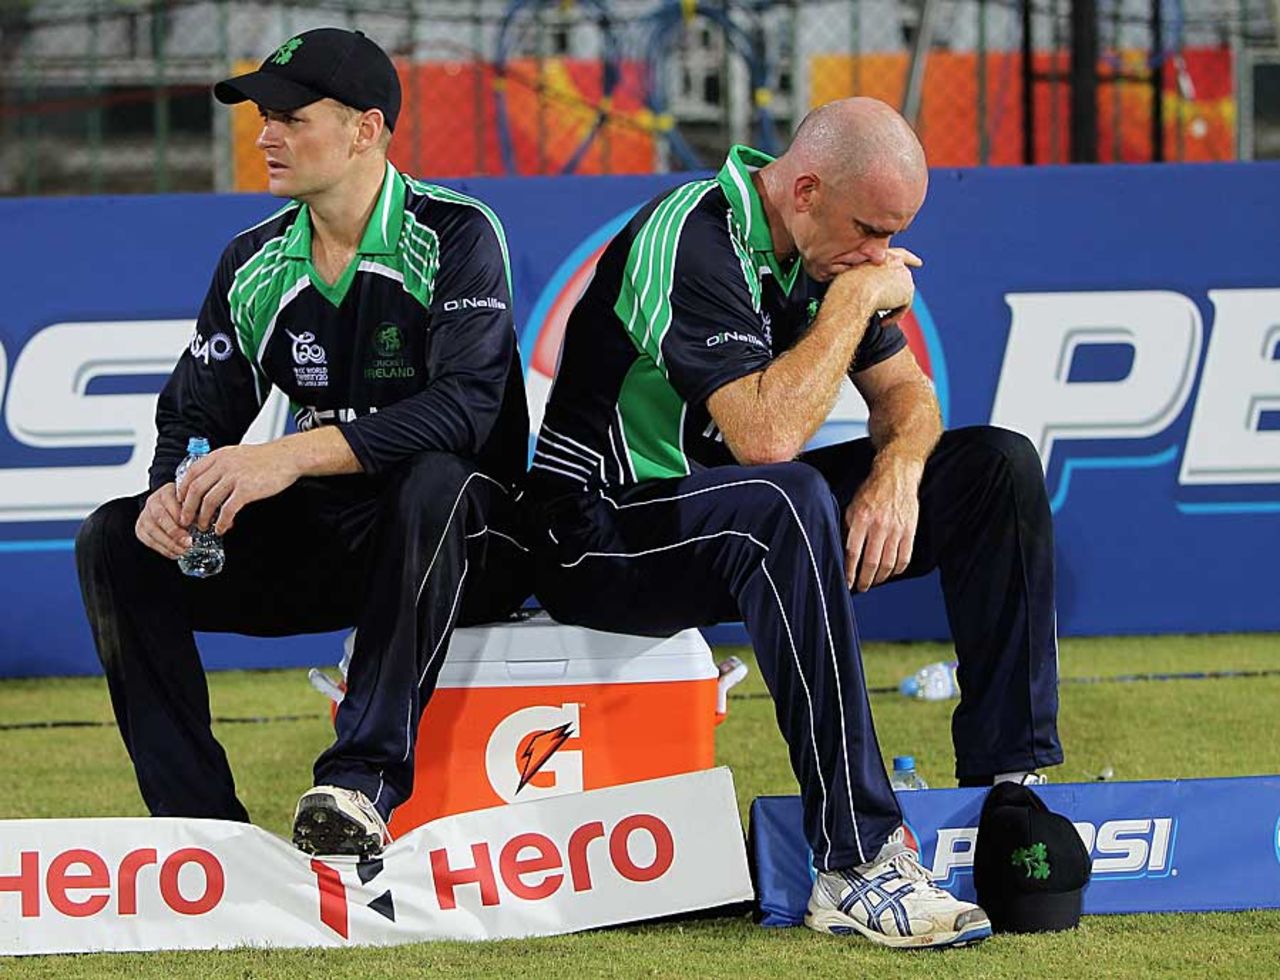 William Porterfield and Trent Johnston after Ireland's defeat, Australia v Ireland, World Twenty20 2012, Group B, Colombo, September 19, 2012